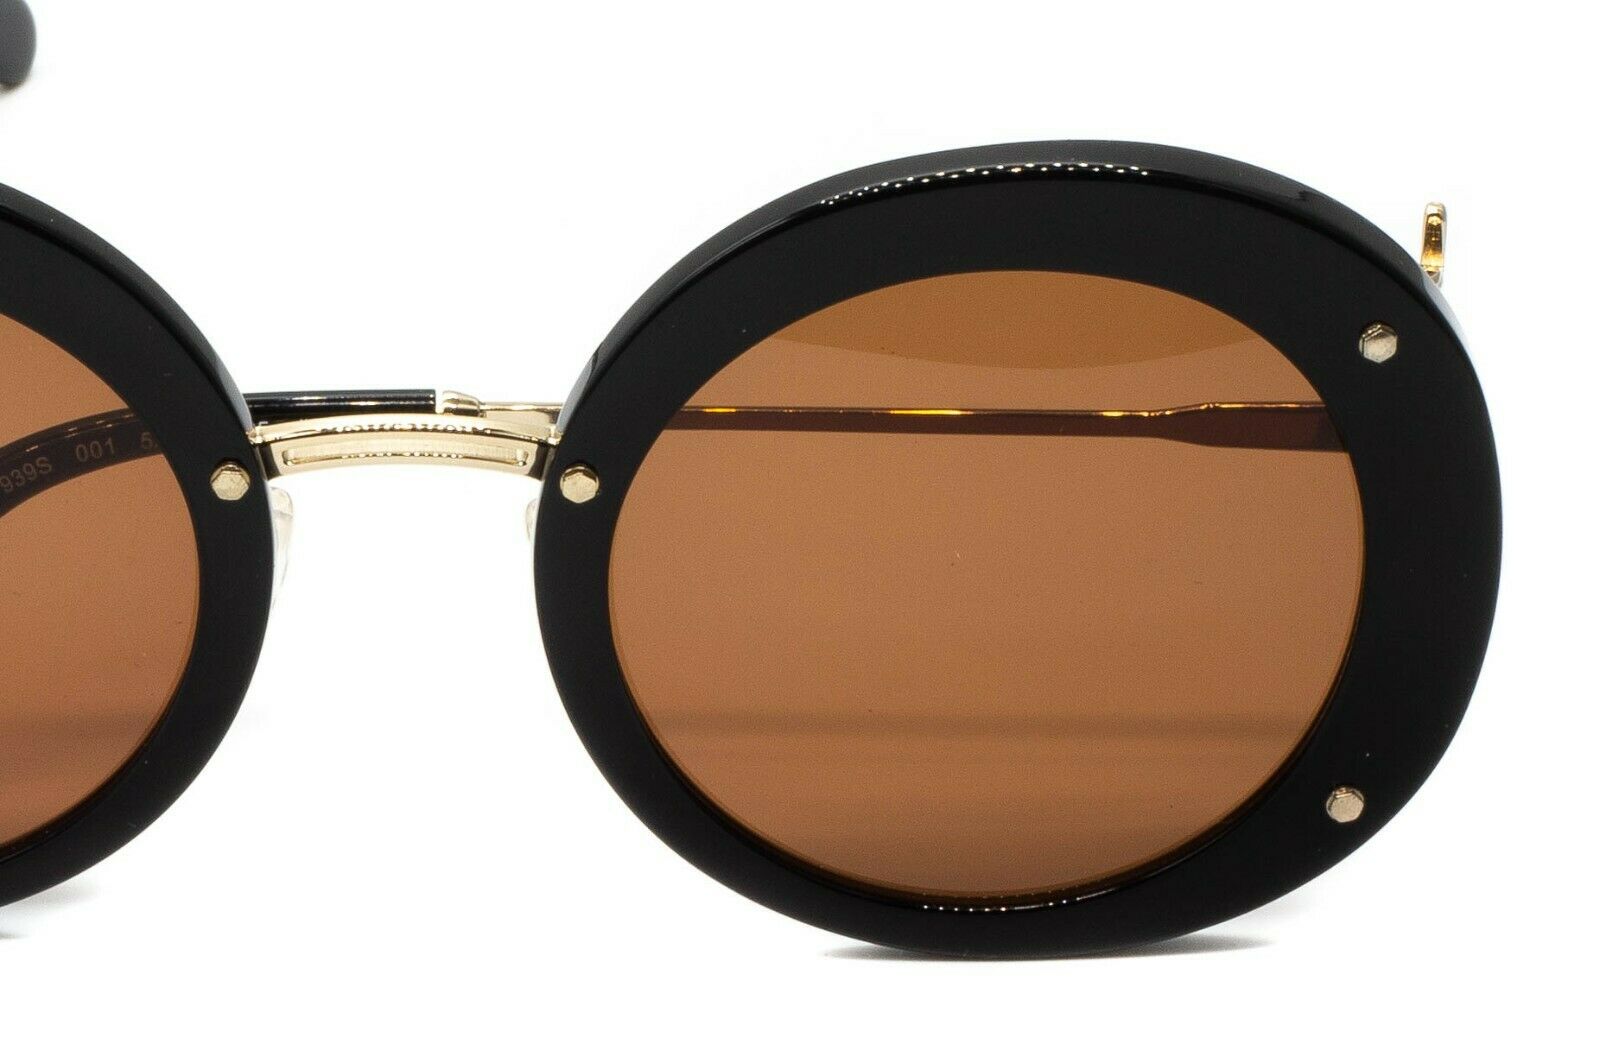 Salvatore Ferragamo SF939S 001 #3 52mm Sunglasses Shades Eyewear New BNIB Italy